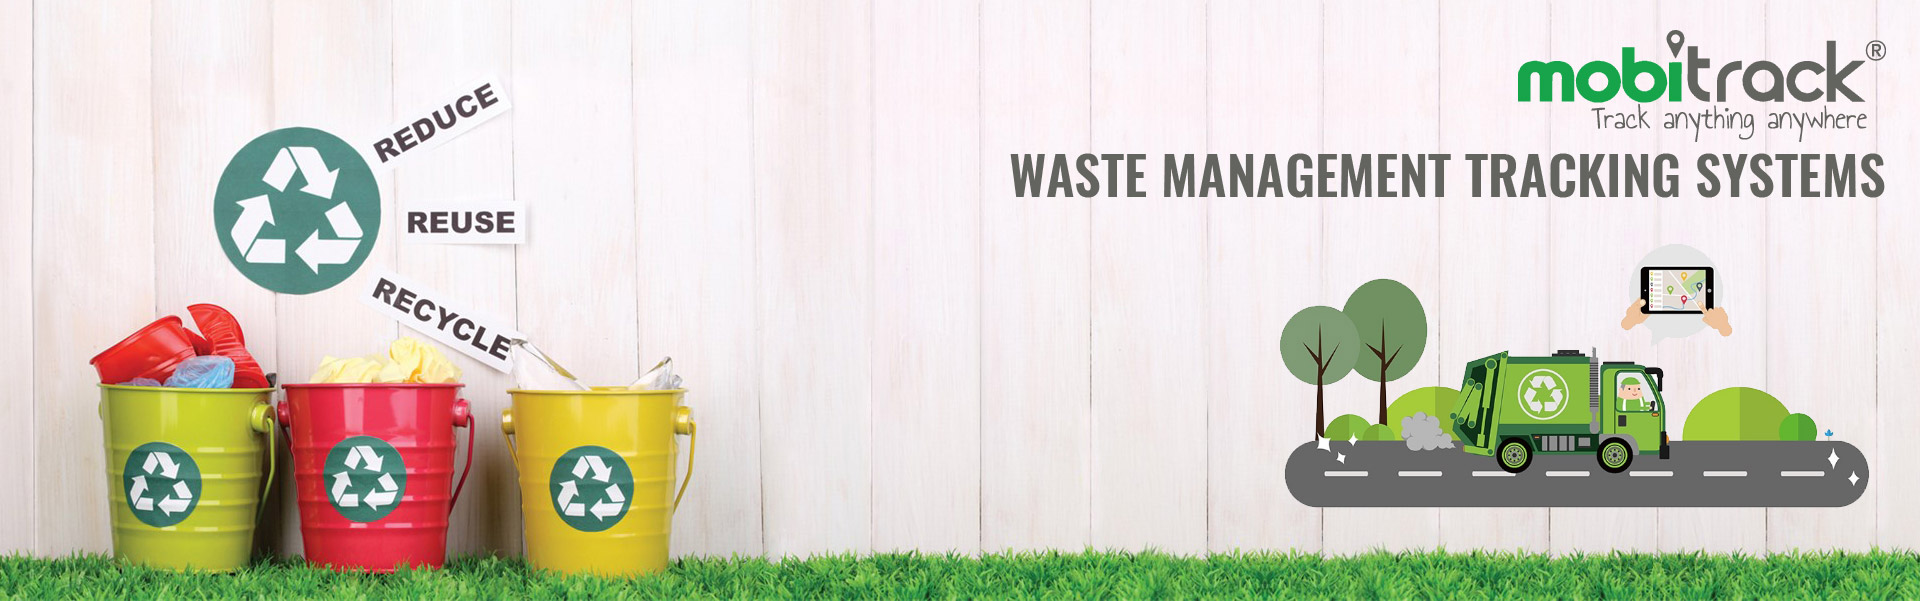 waste management tracking systems qatar